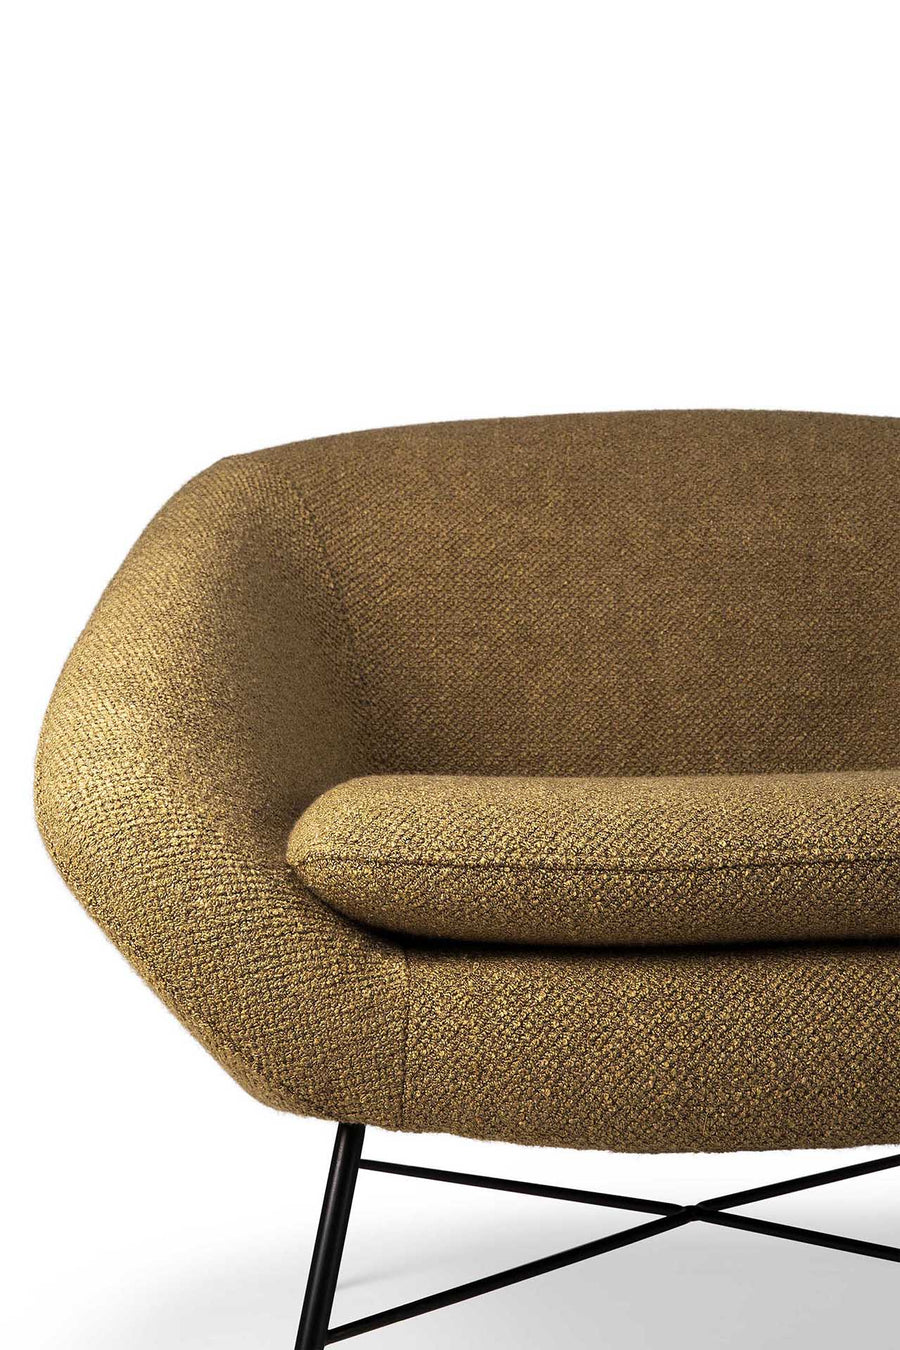 Barrow Lounge Chair - Ginger